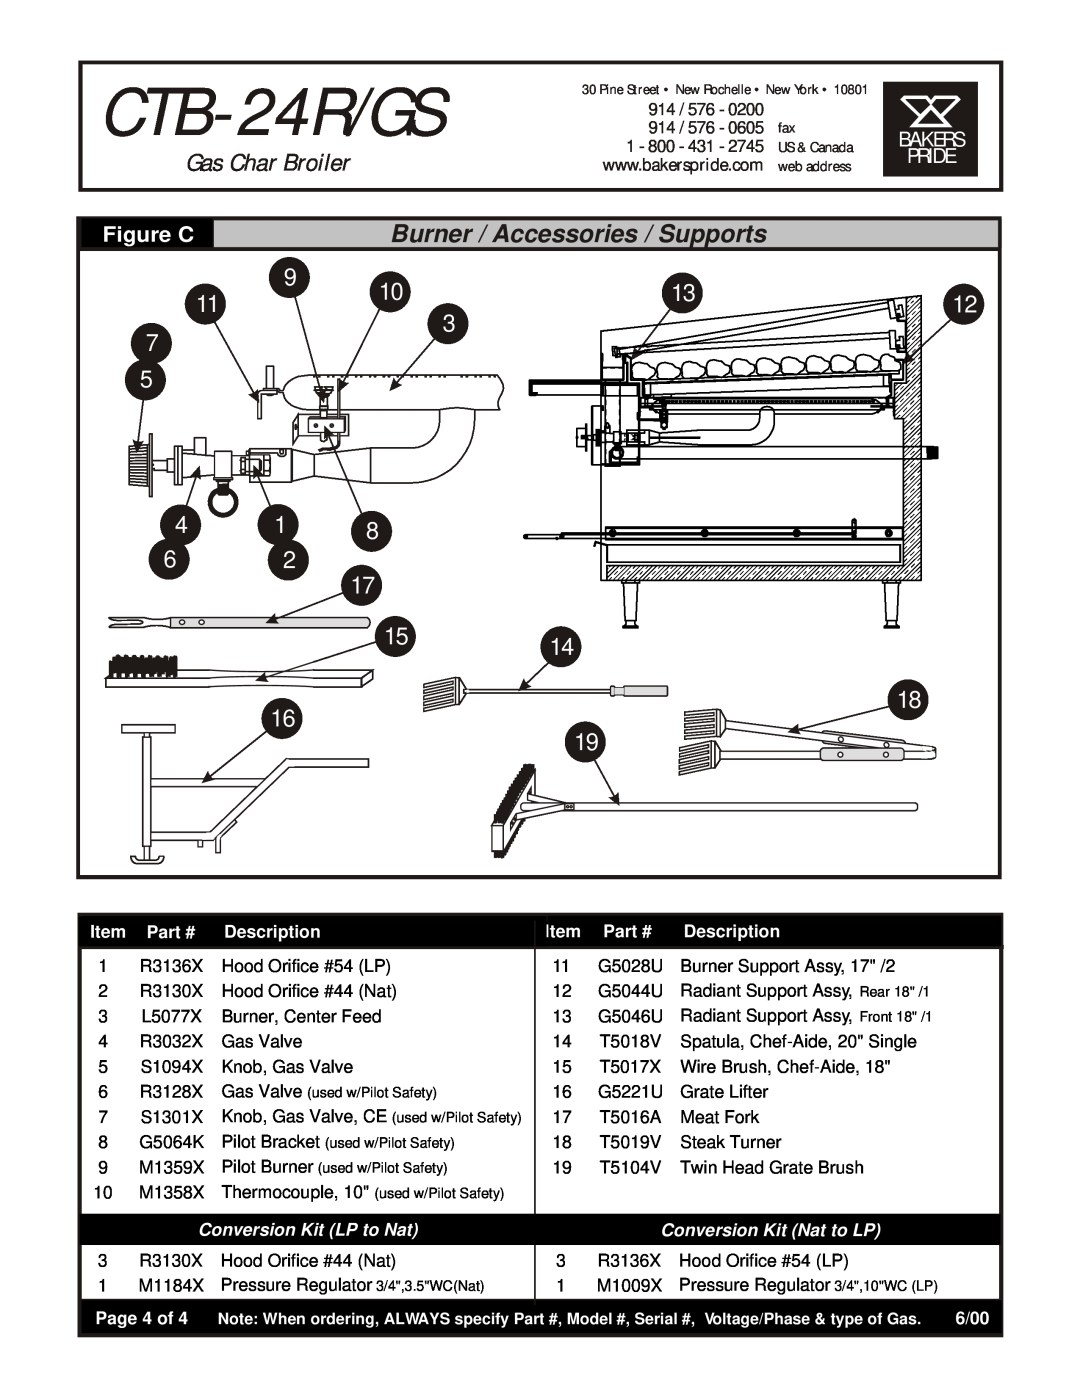 Bakers Pride Oven CTB-24R Burner / Accessories / Supports, Pride, Figure C, 914 / 576, 1 - 800, Description, Page 4 of 